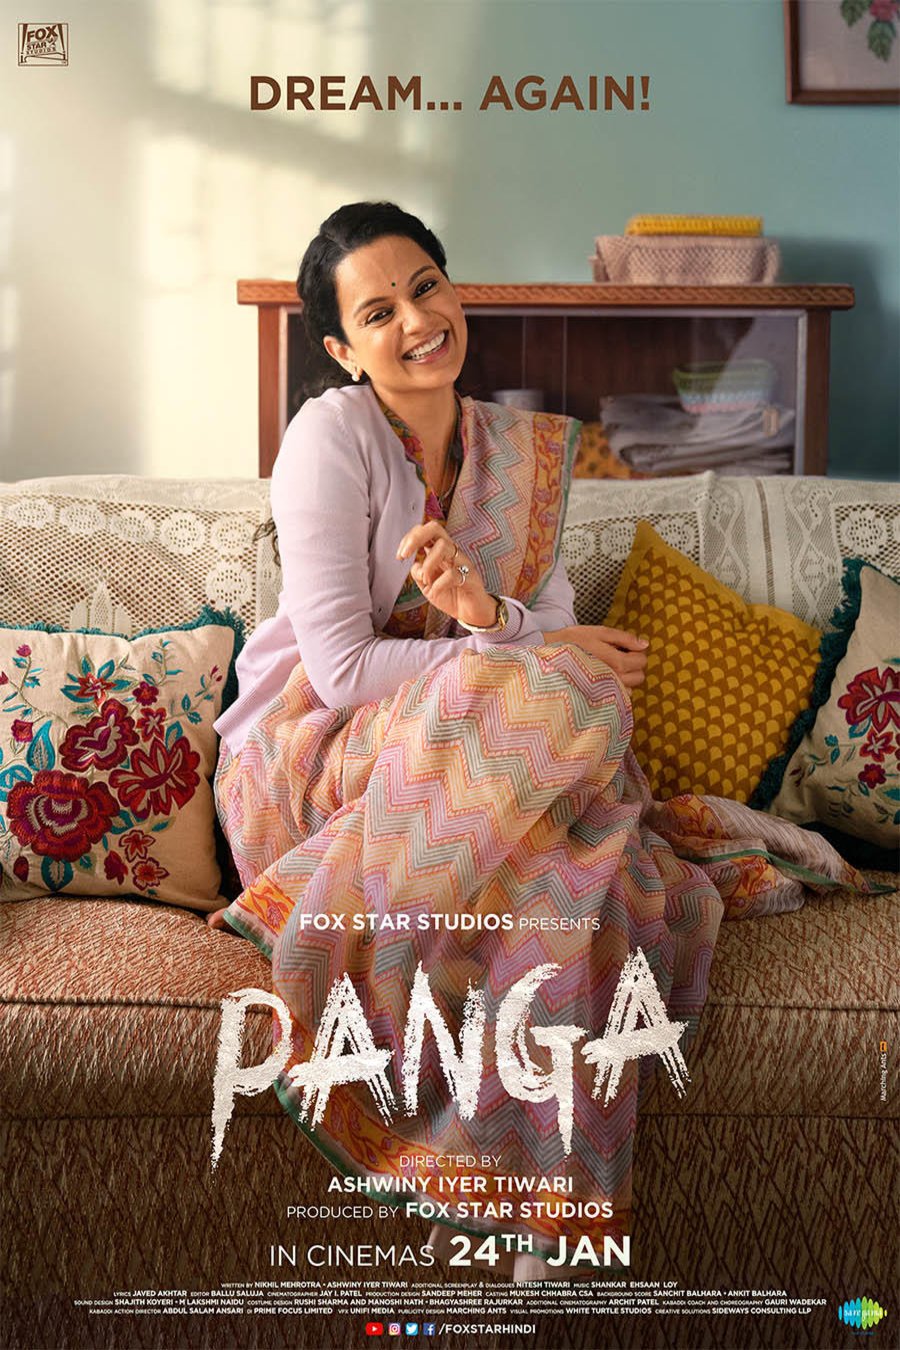 Hindi poster of the movie Panga